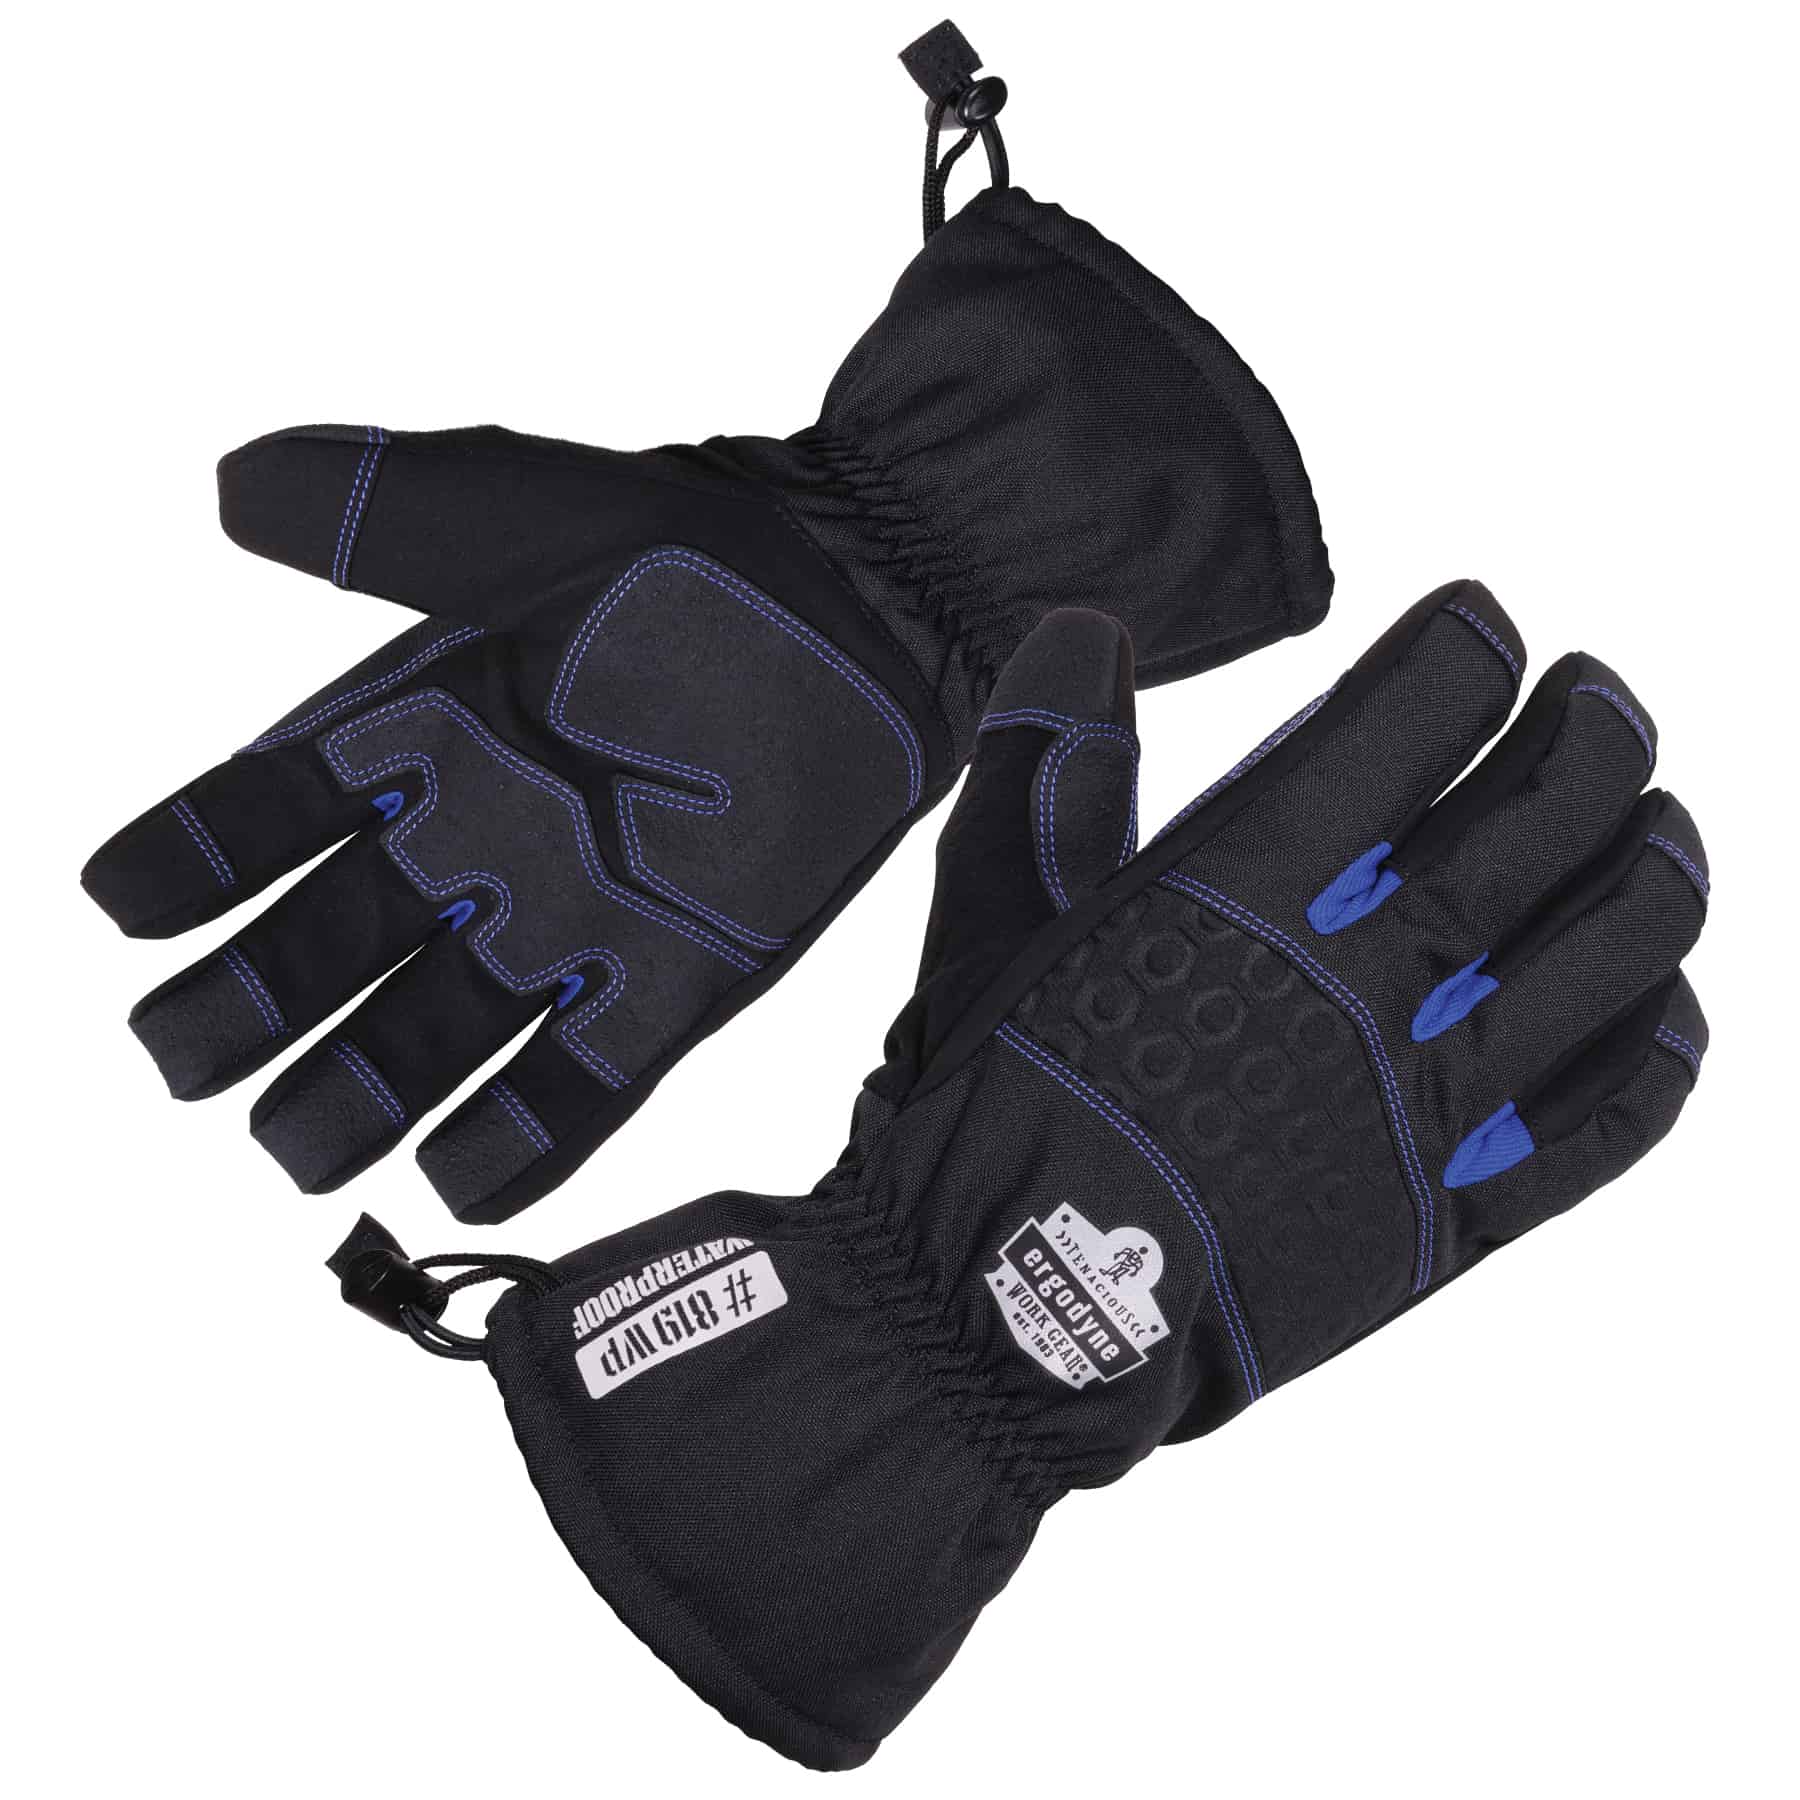  KONGOUARD Waterproof Winter Work Gloves for Men Women